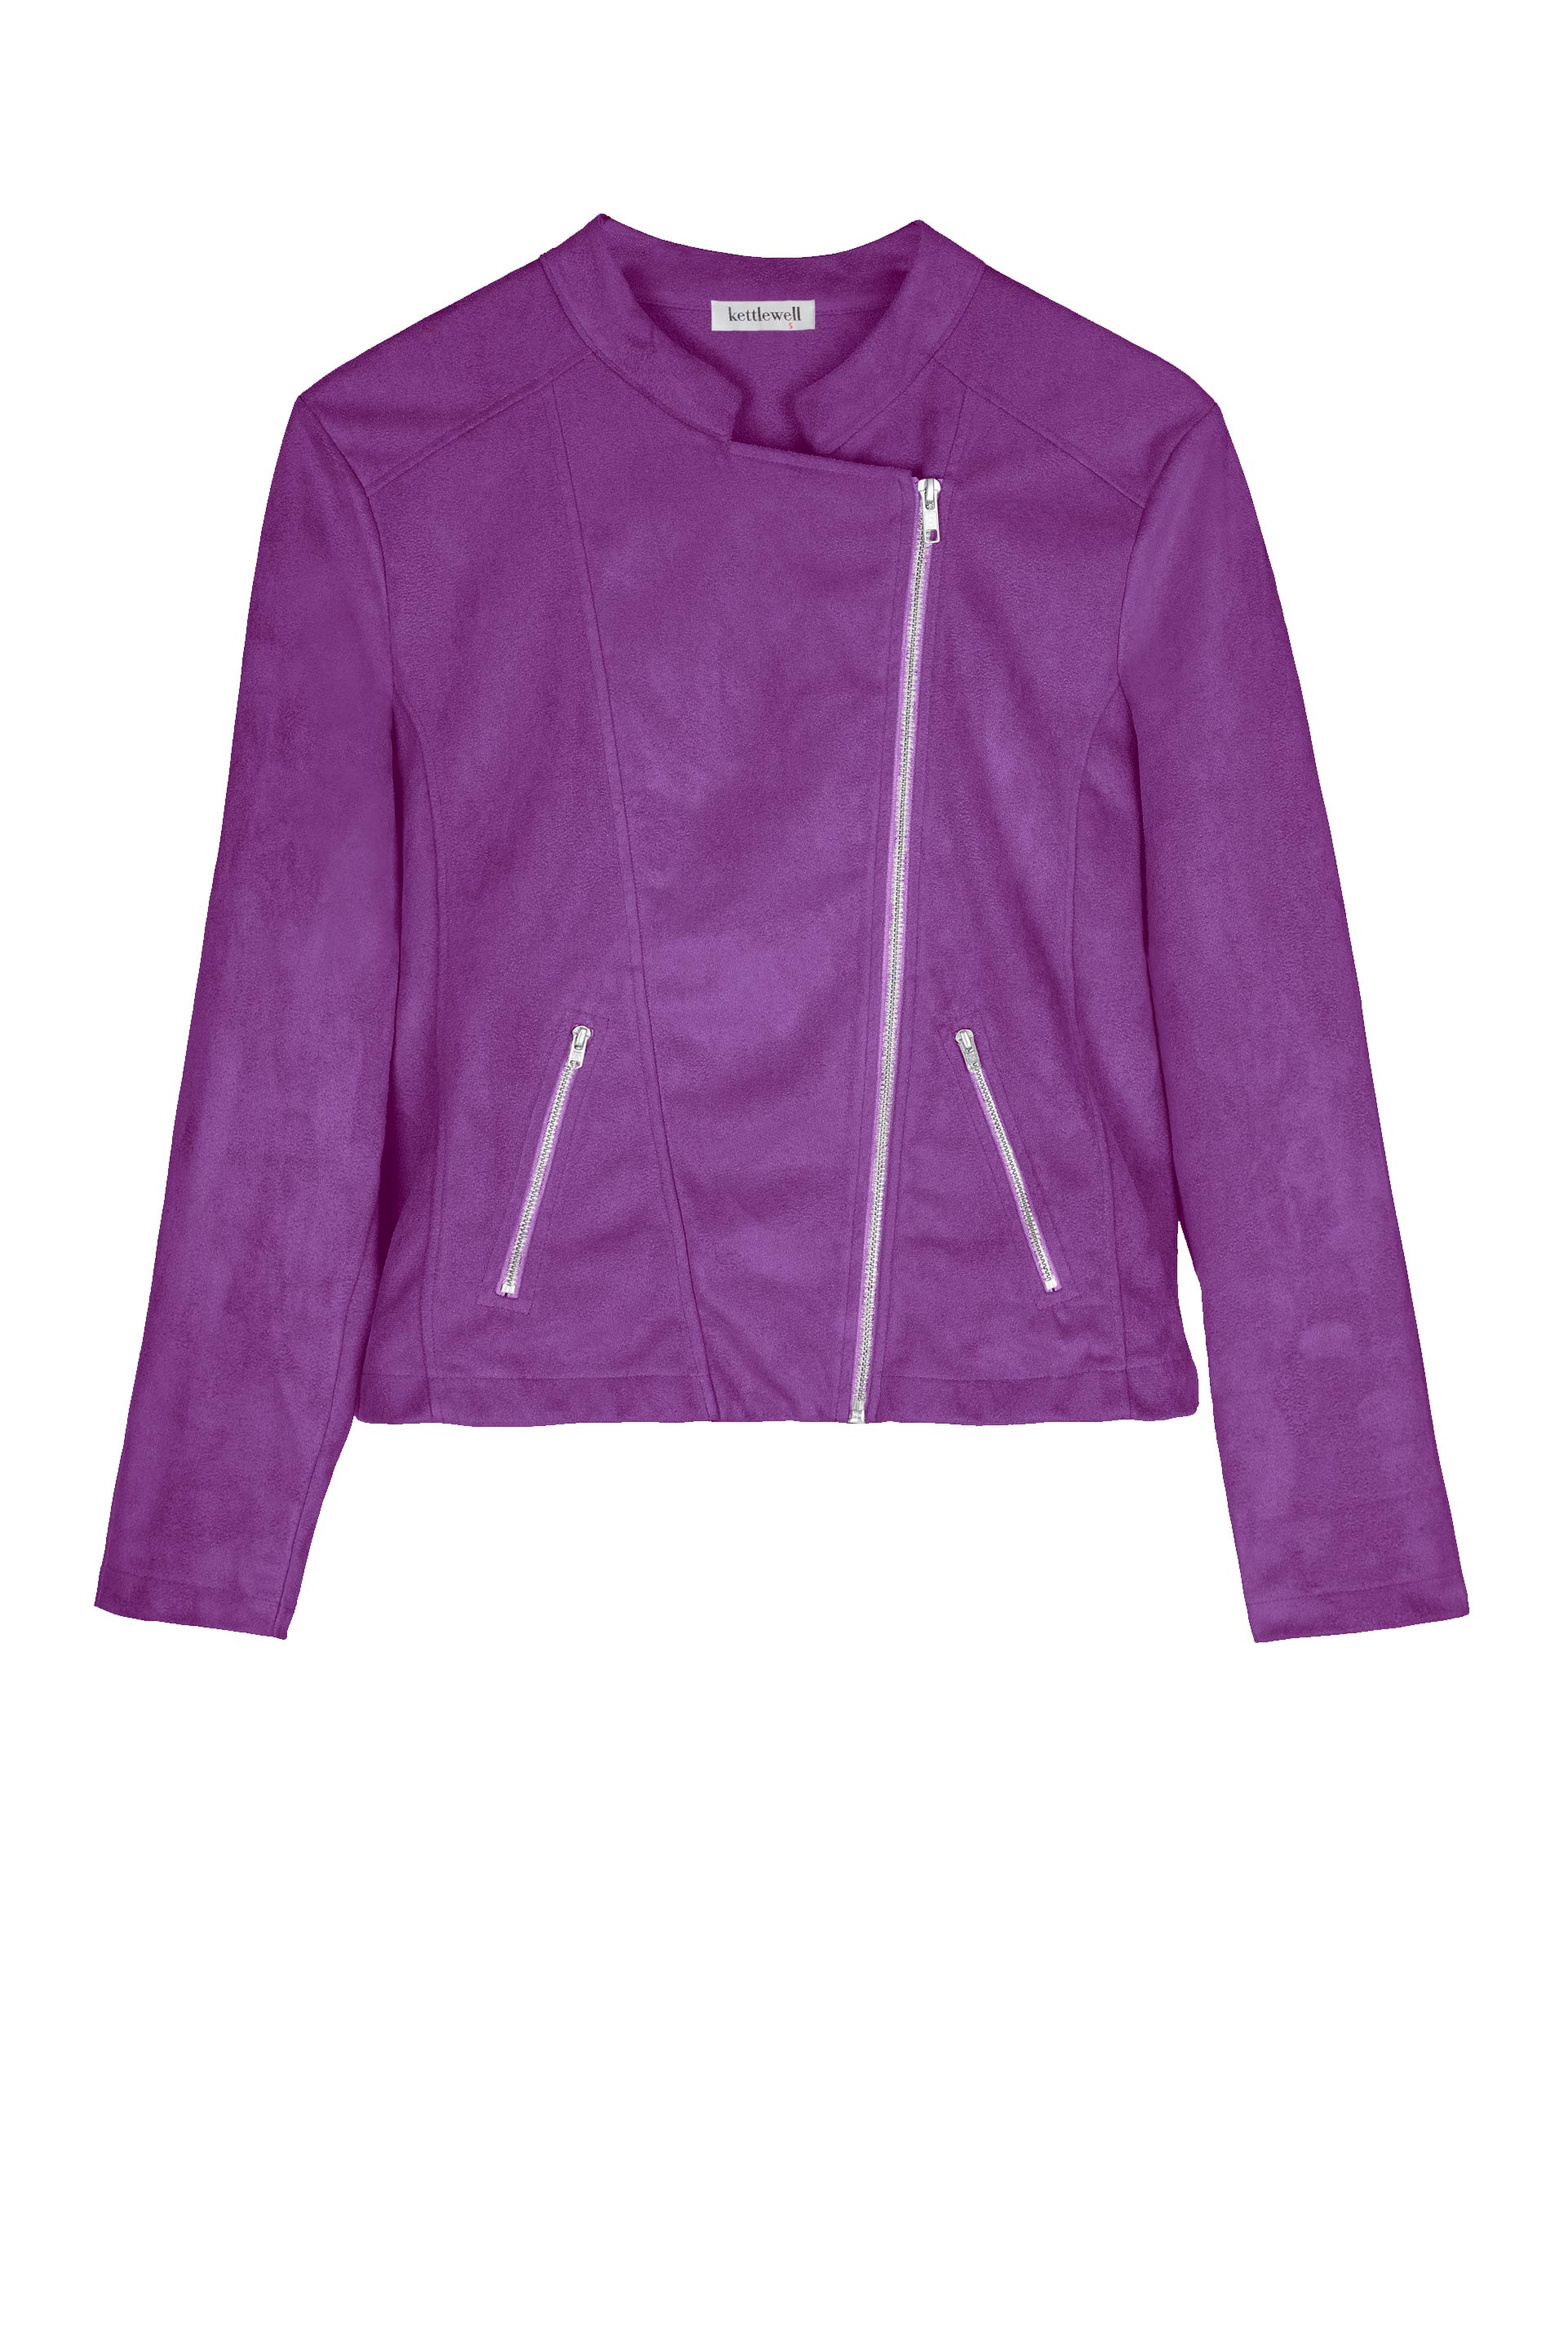 74233_rachel_jacket_bright_violet.jpg